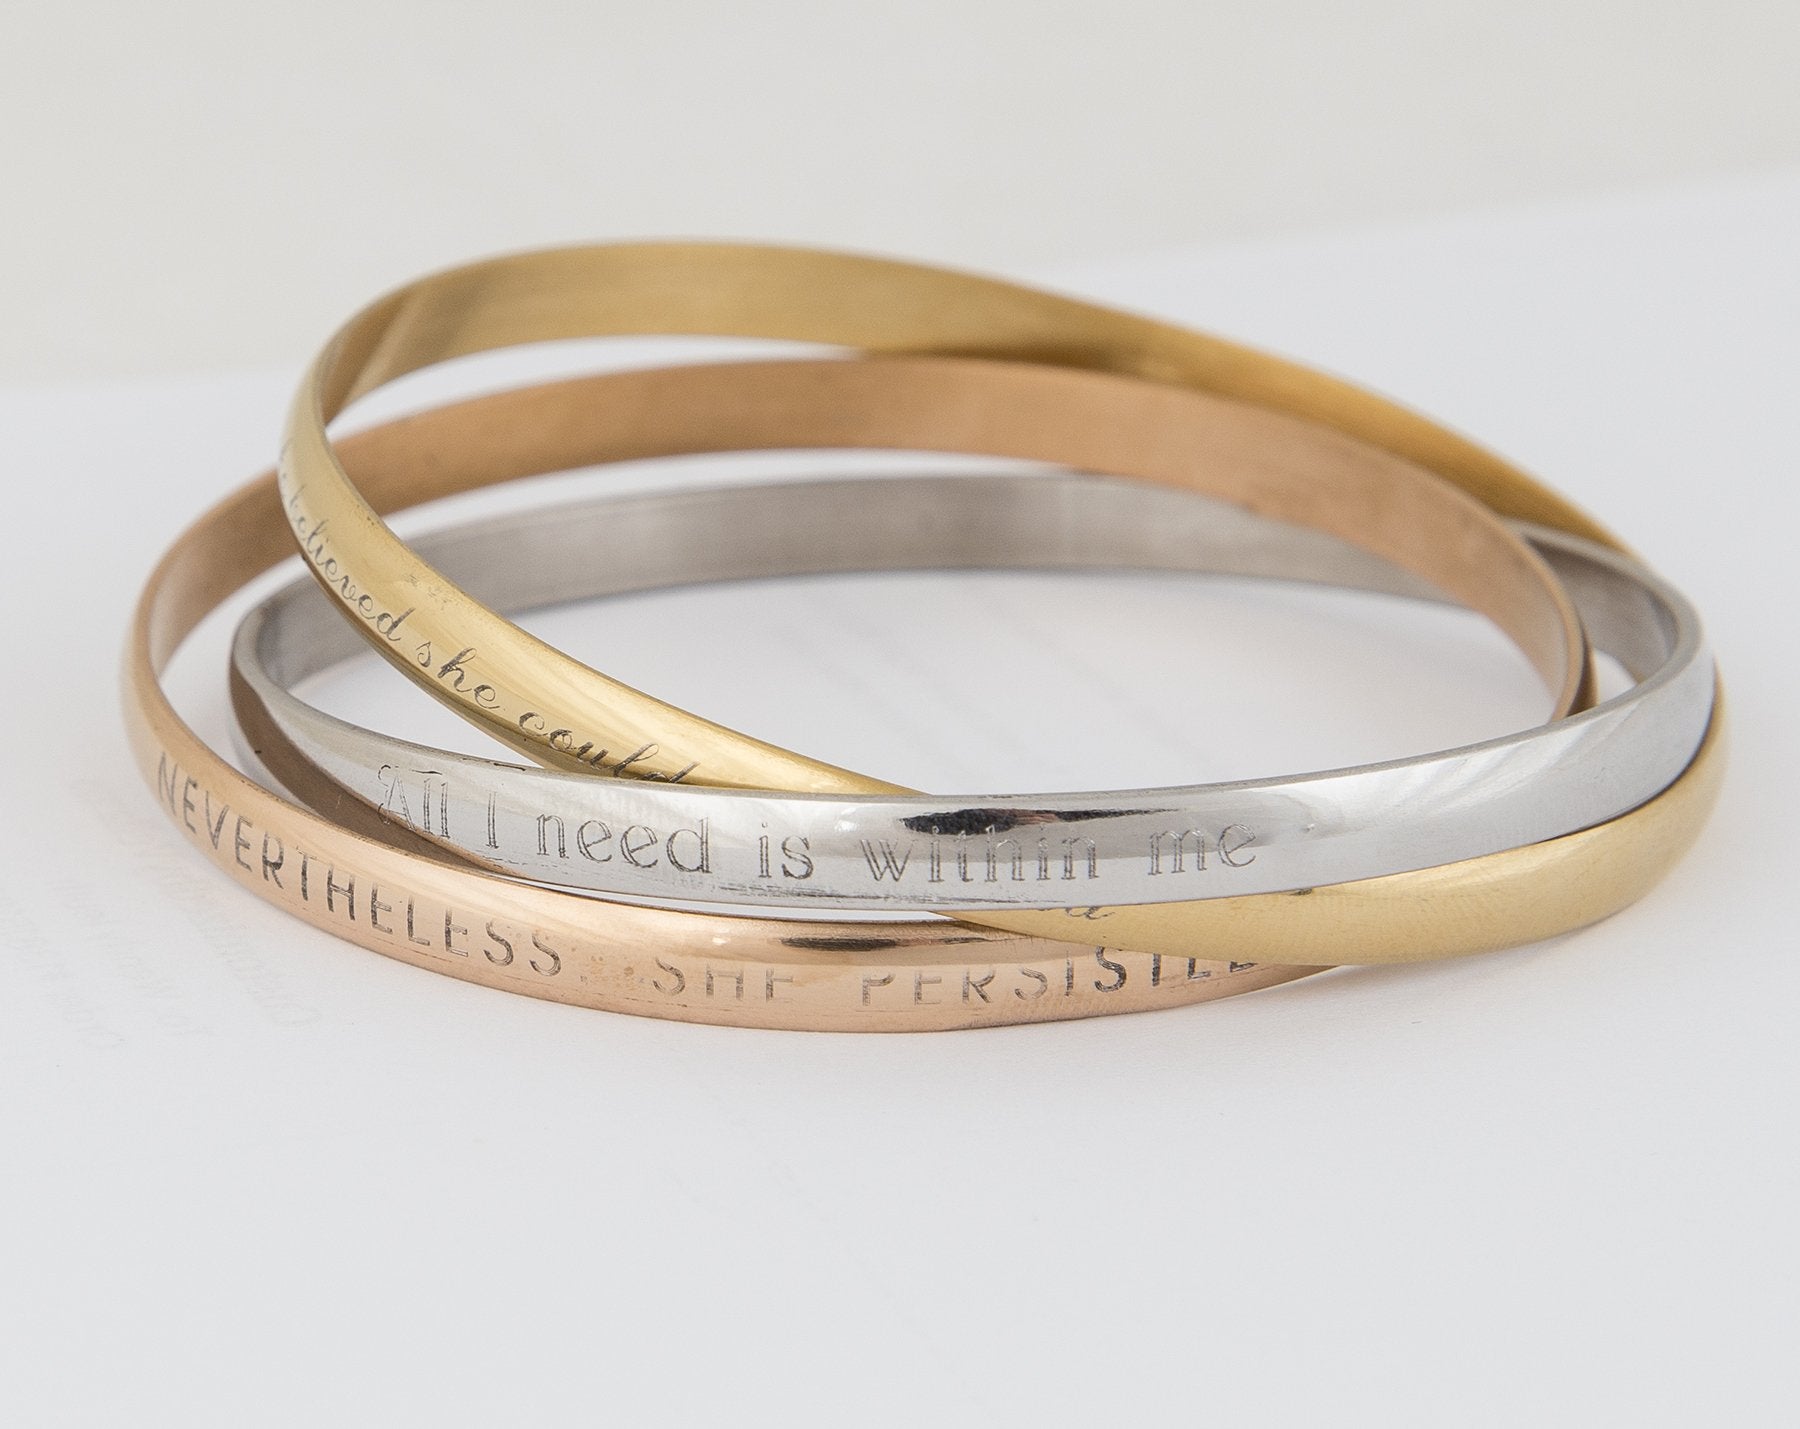 Personalized interlocking bracelets gift, inspirational quote engraved